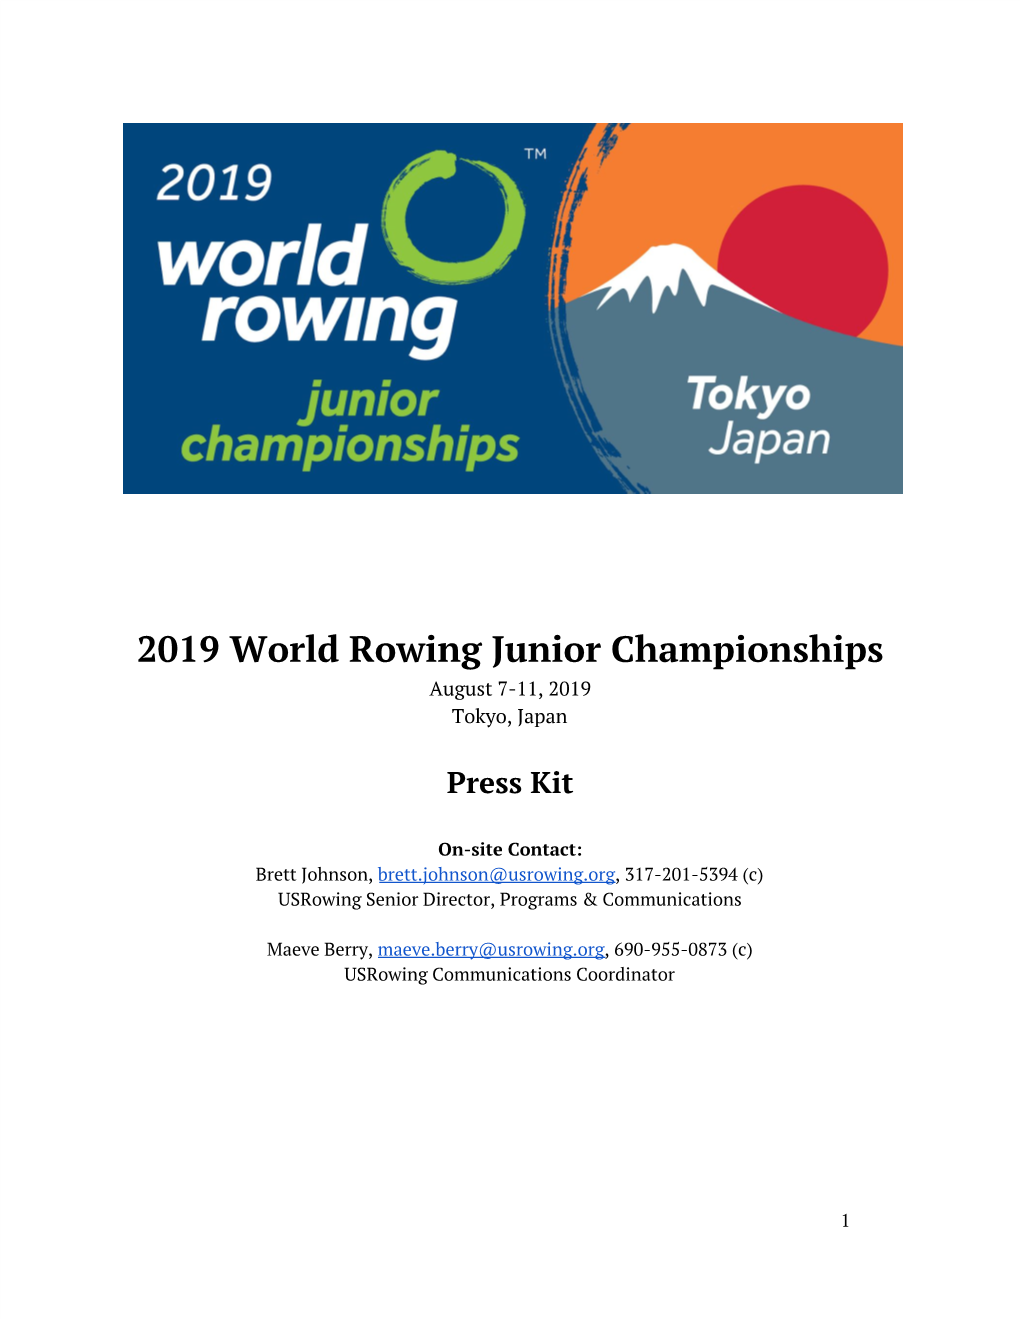 2019 World Rowing Junior Championships August 7-11, 2019 Tokyo, Japan